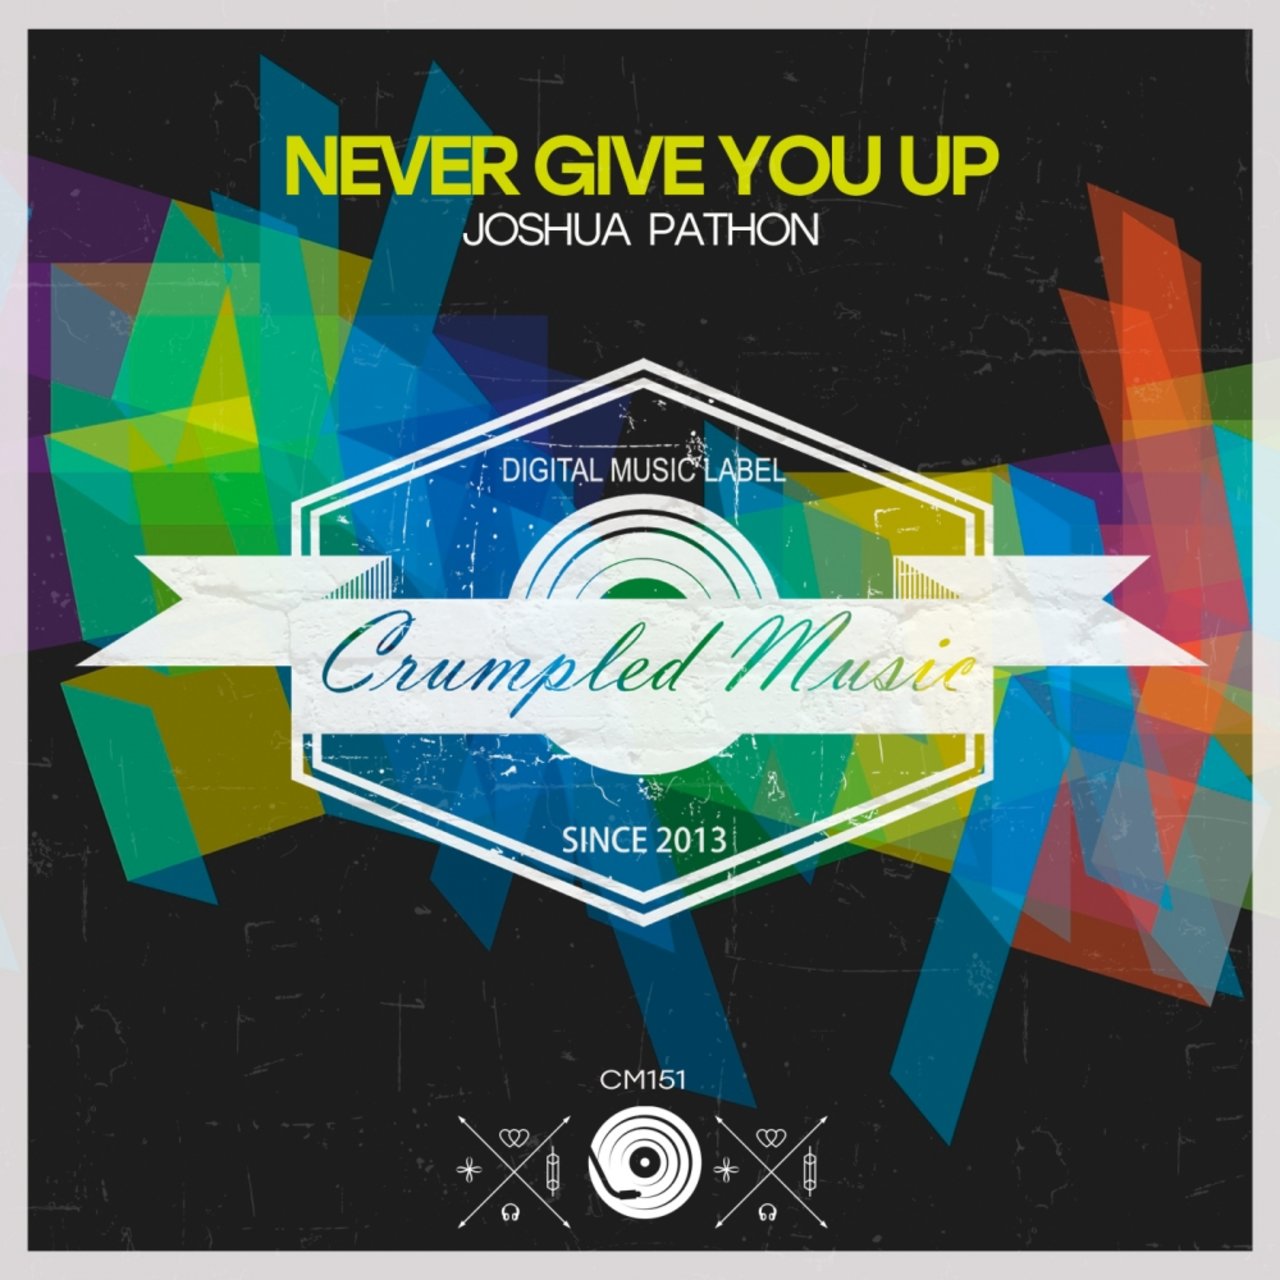 Joshua Pathon - Never Give You Up / Crumpled Music